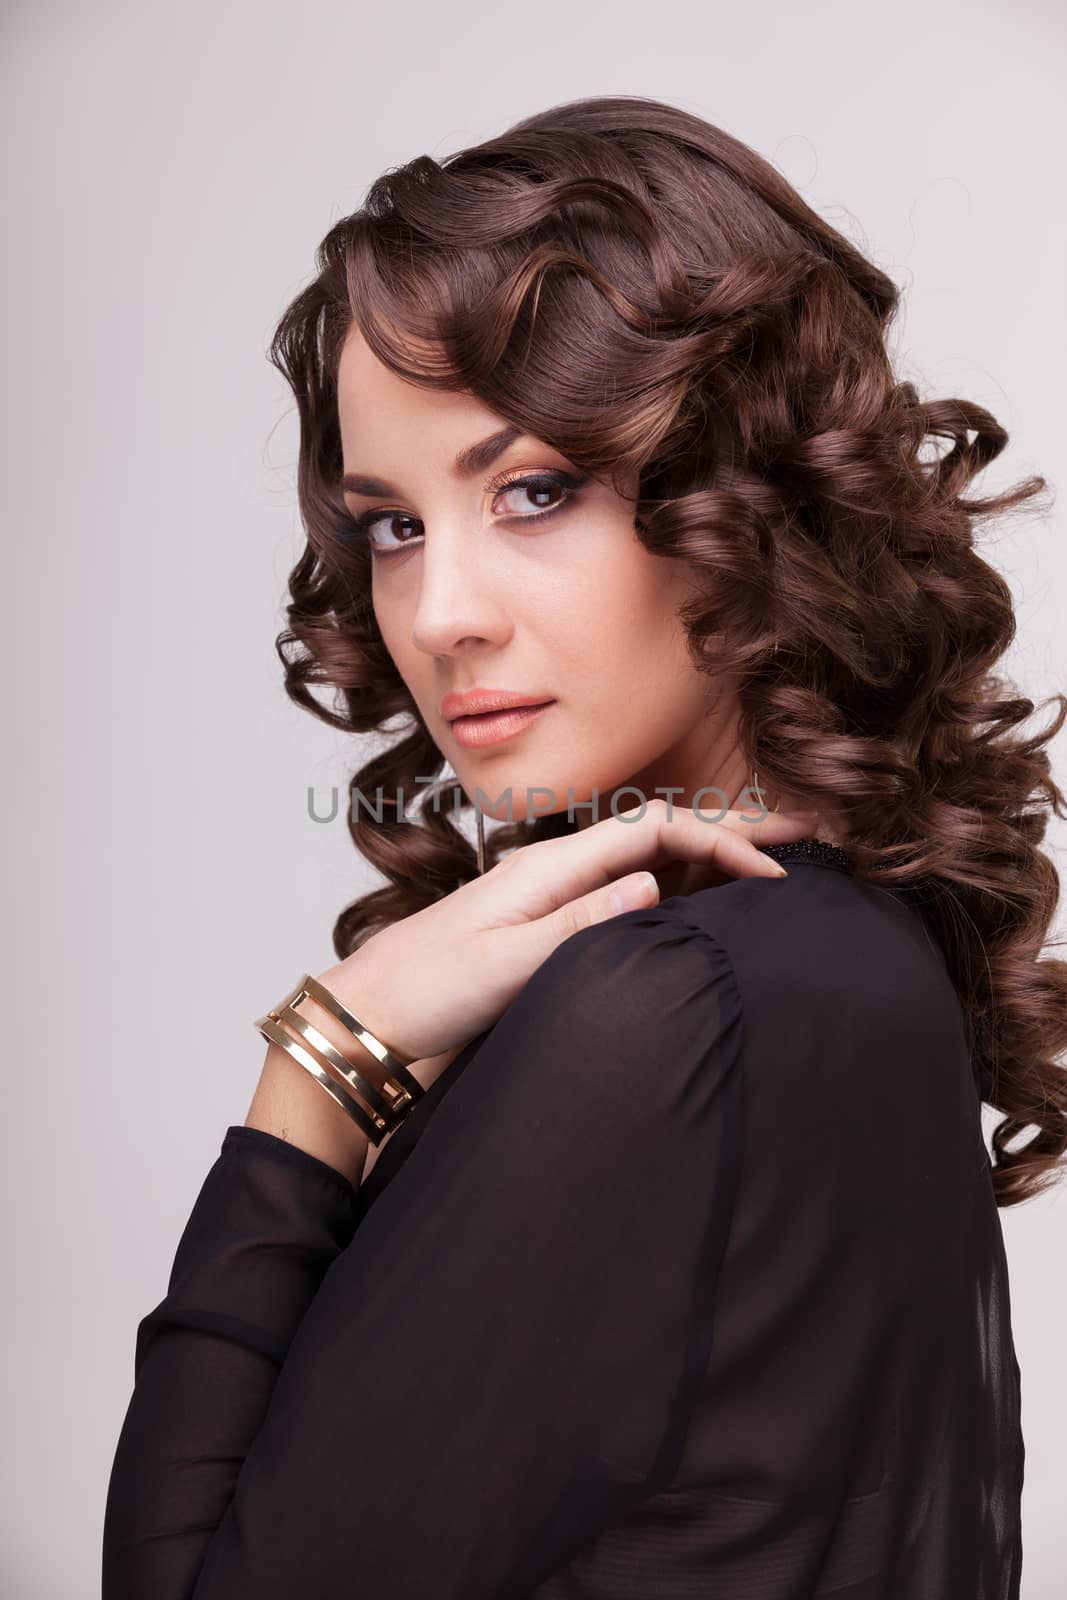 Gorgeous woman professional make up by DCStudio